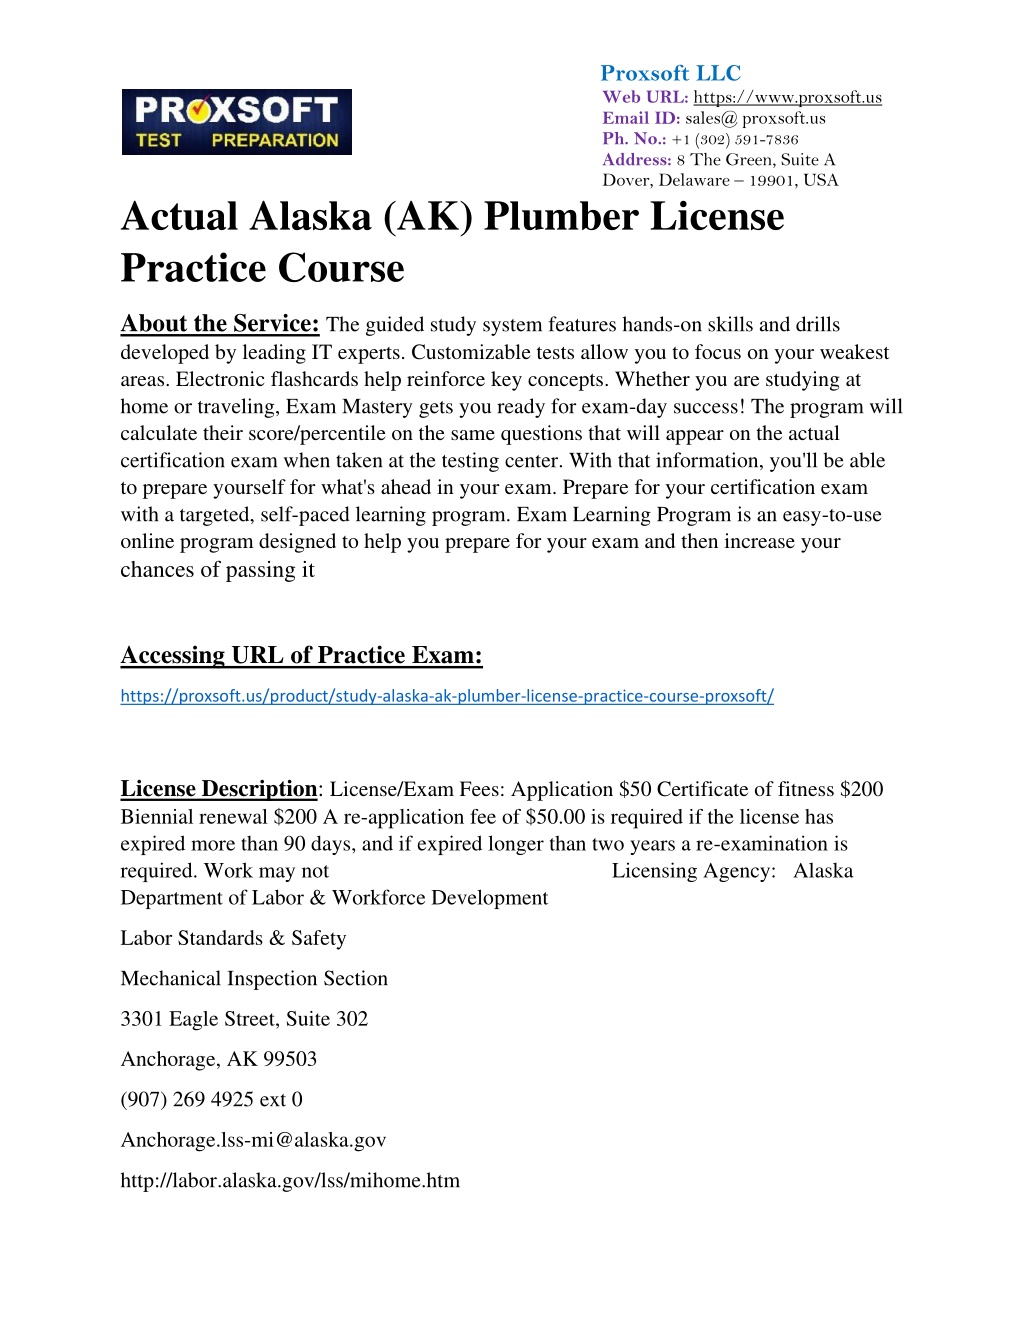 download the new version Alaska plumber installer license prep class